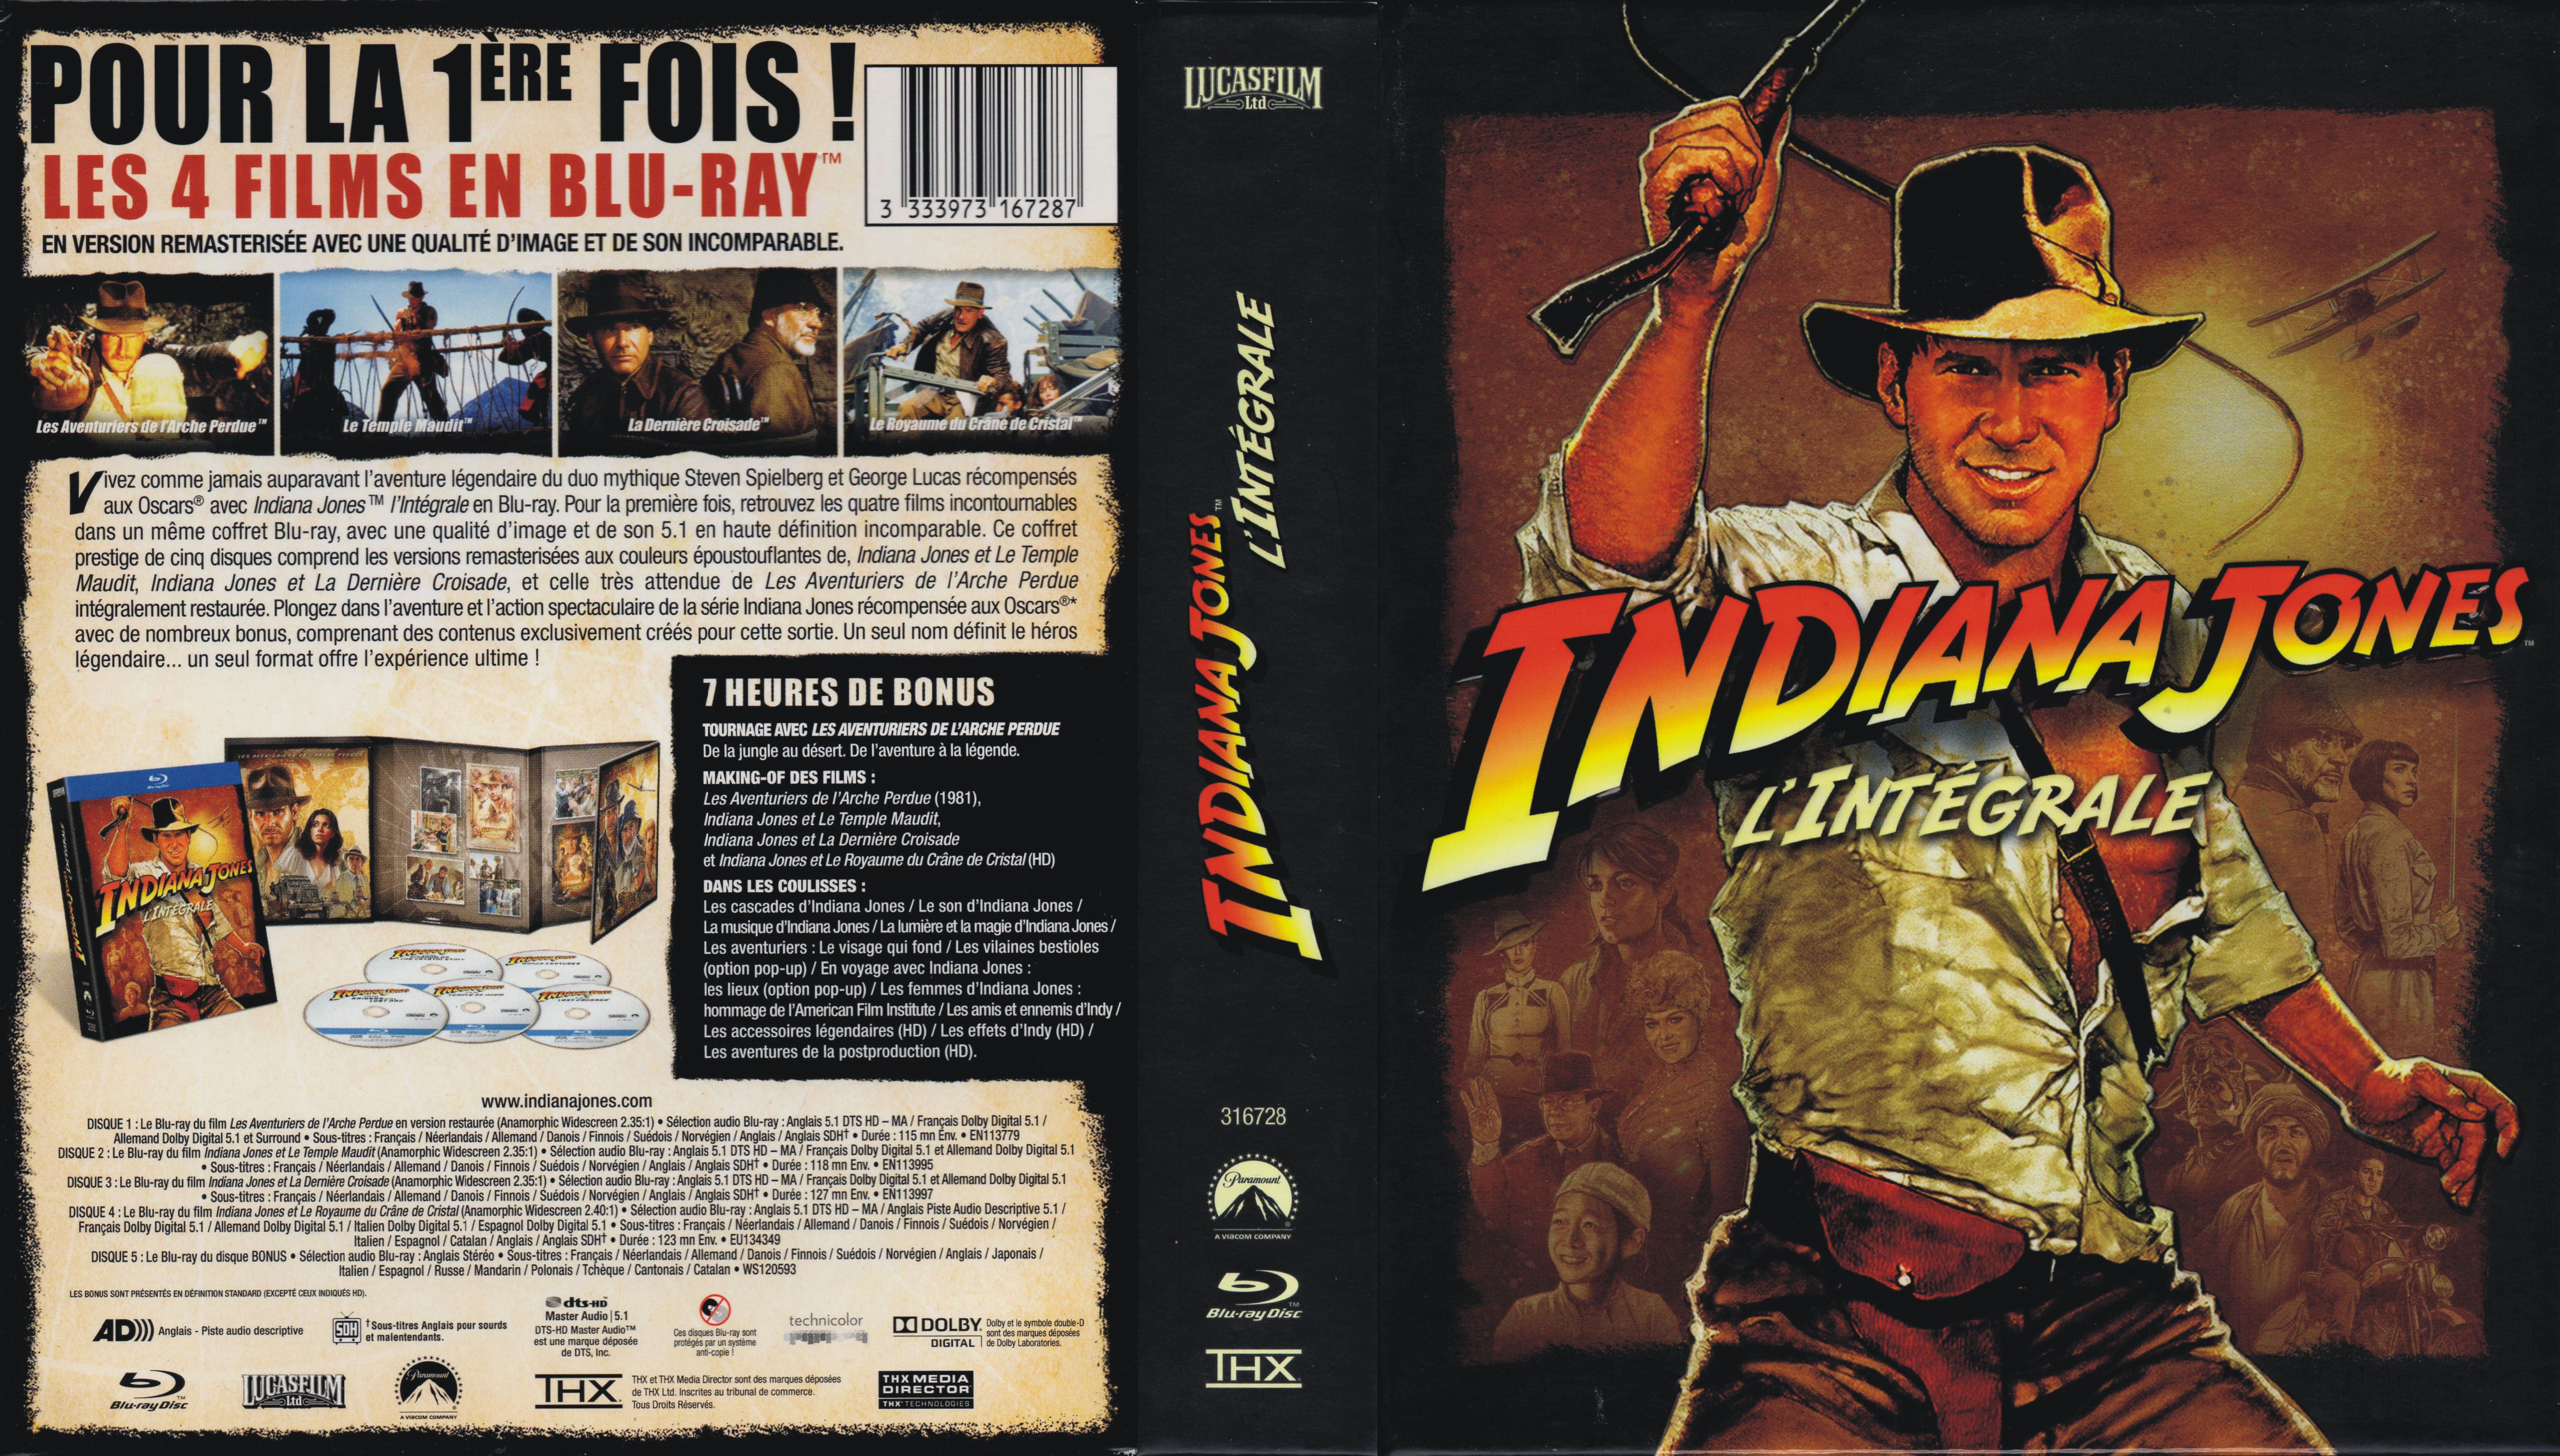 Jaquette DVD Indiana Jones Intgrale COFFRET (BLU-RAY) v2